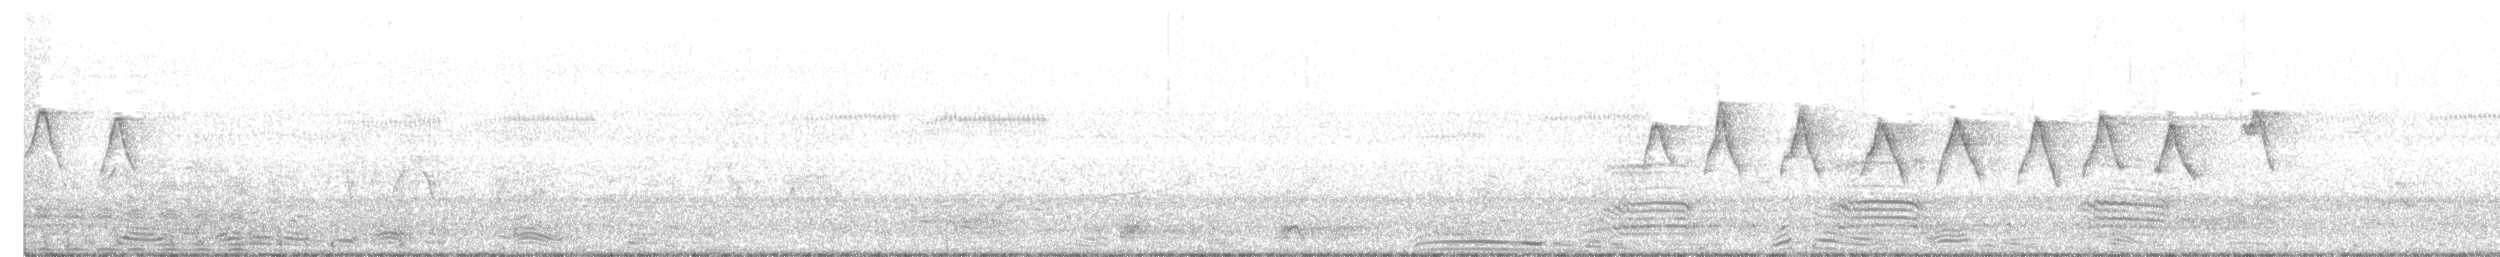 Ak Kaşlı Serikornis - ML281378201